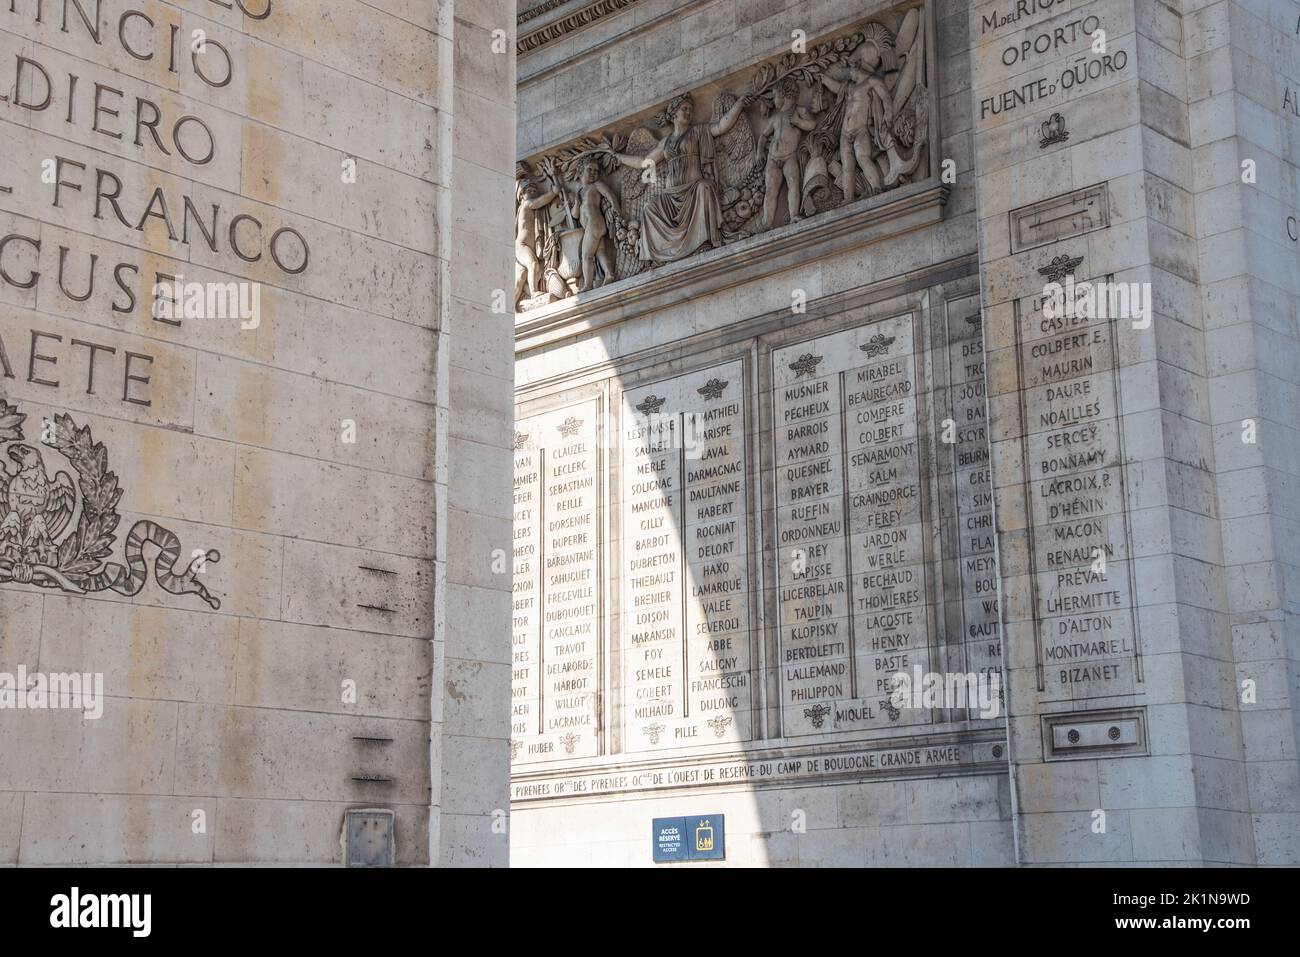 Paris, frankreich. August 2022. Der Arc de Triomph auf dem Place d'Etoile in Paris. Hochwertige Fotos Stockfoto